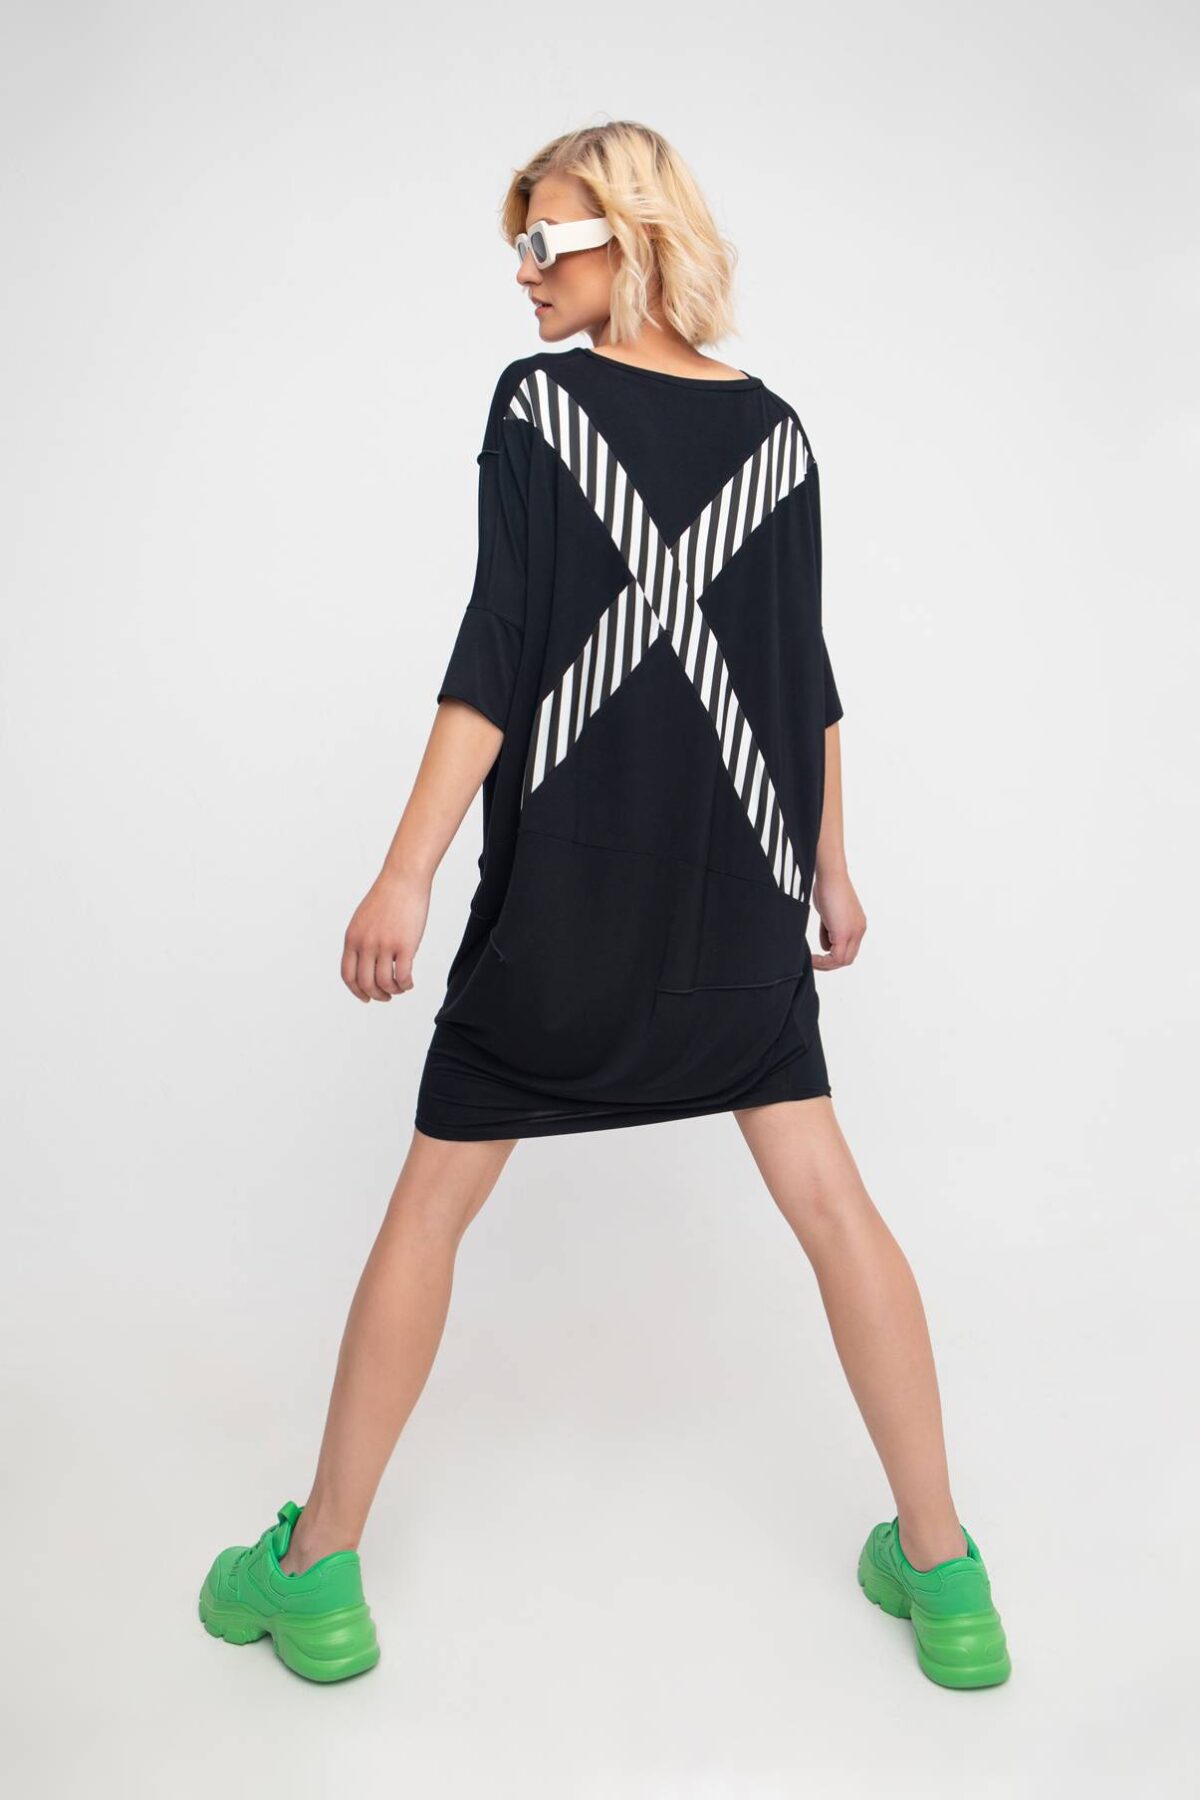 ozai_n_ku_midi_oversize_dress-plus_size_new_collection_spring